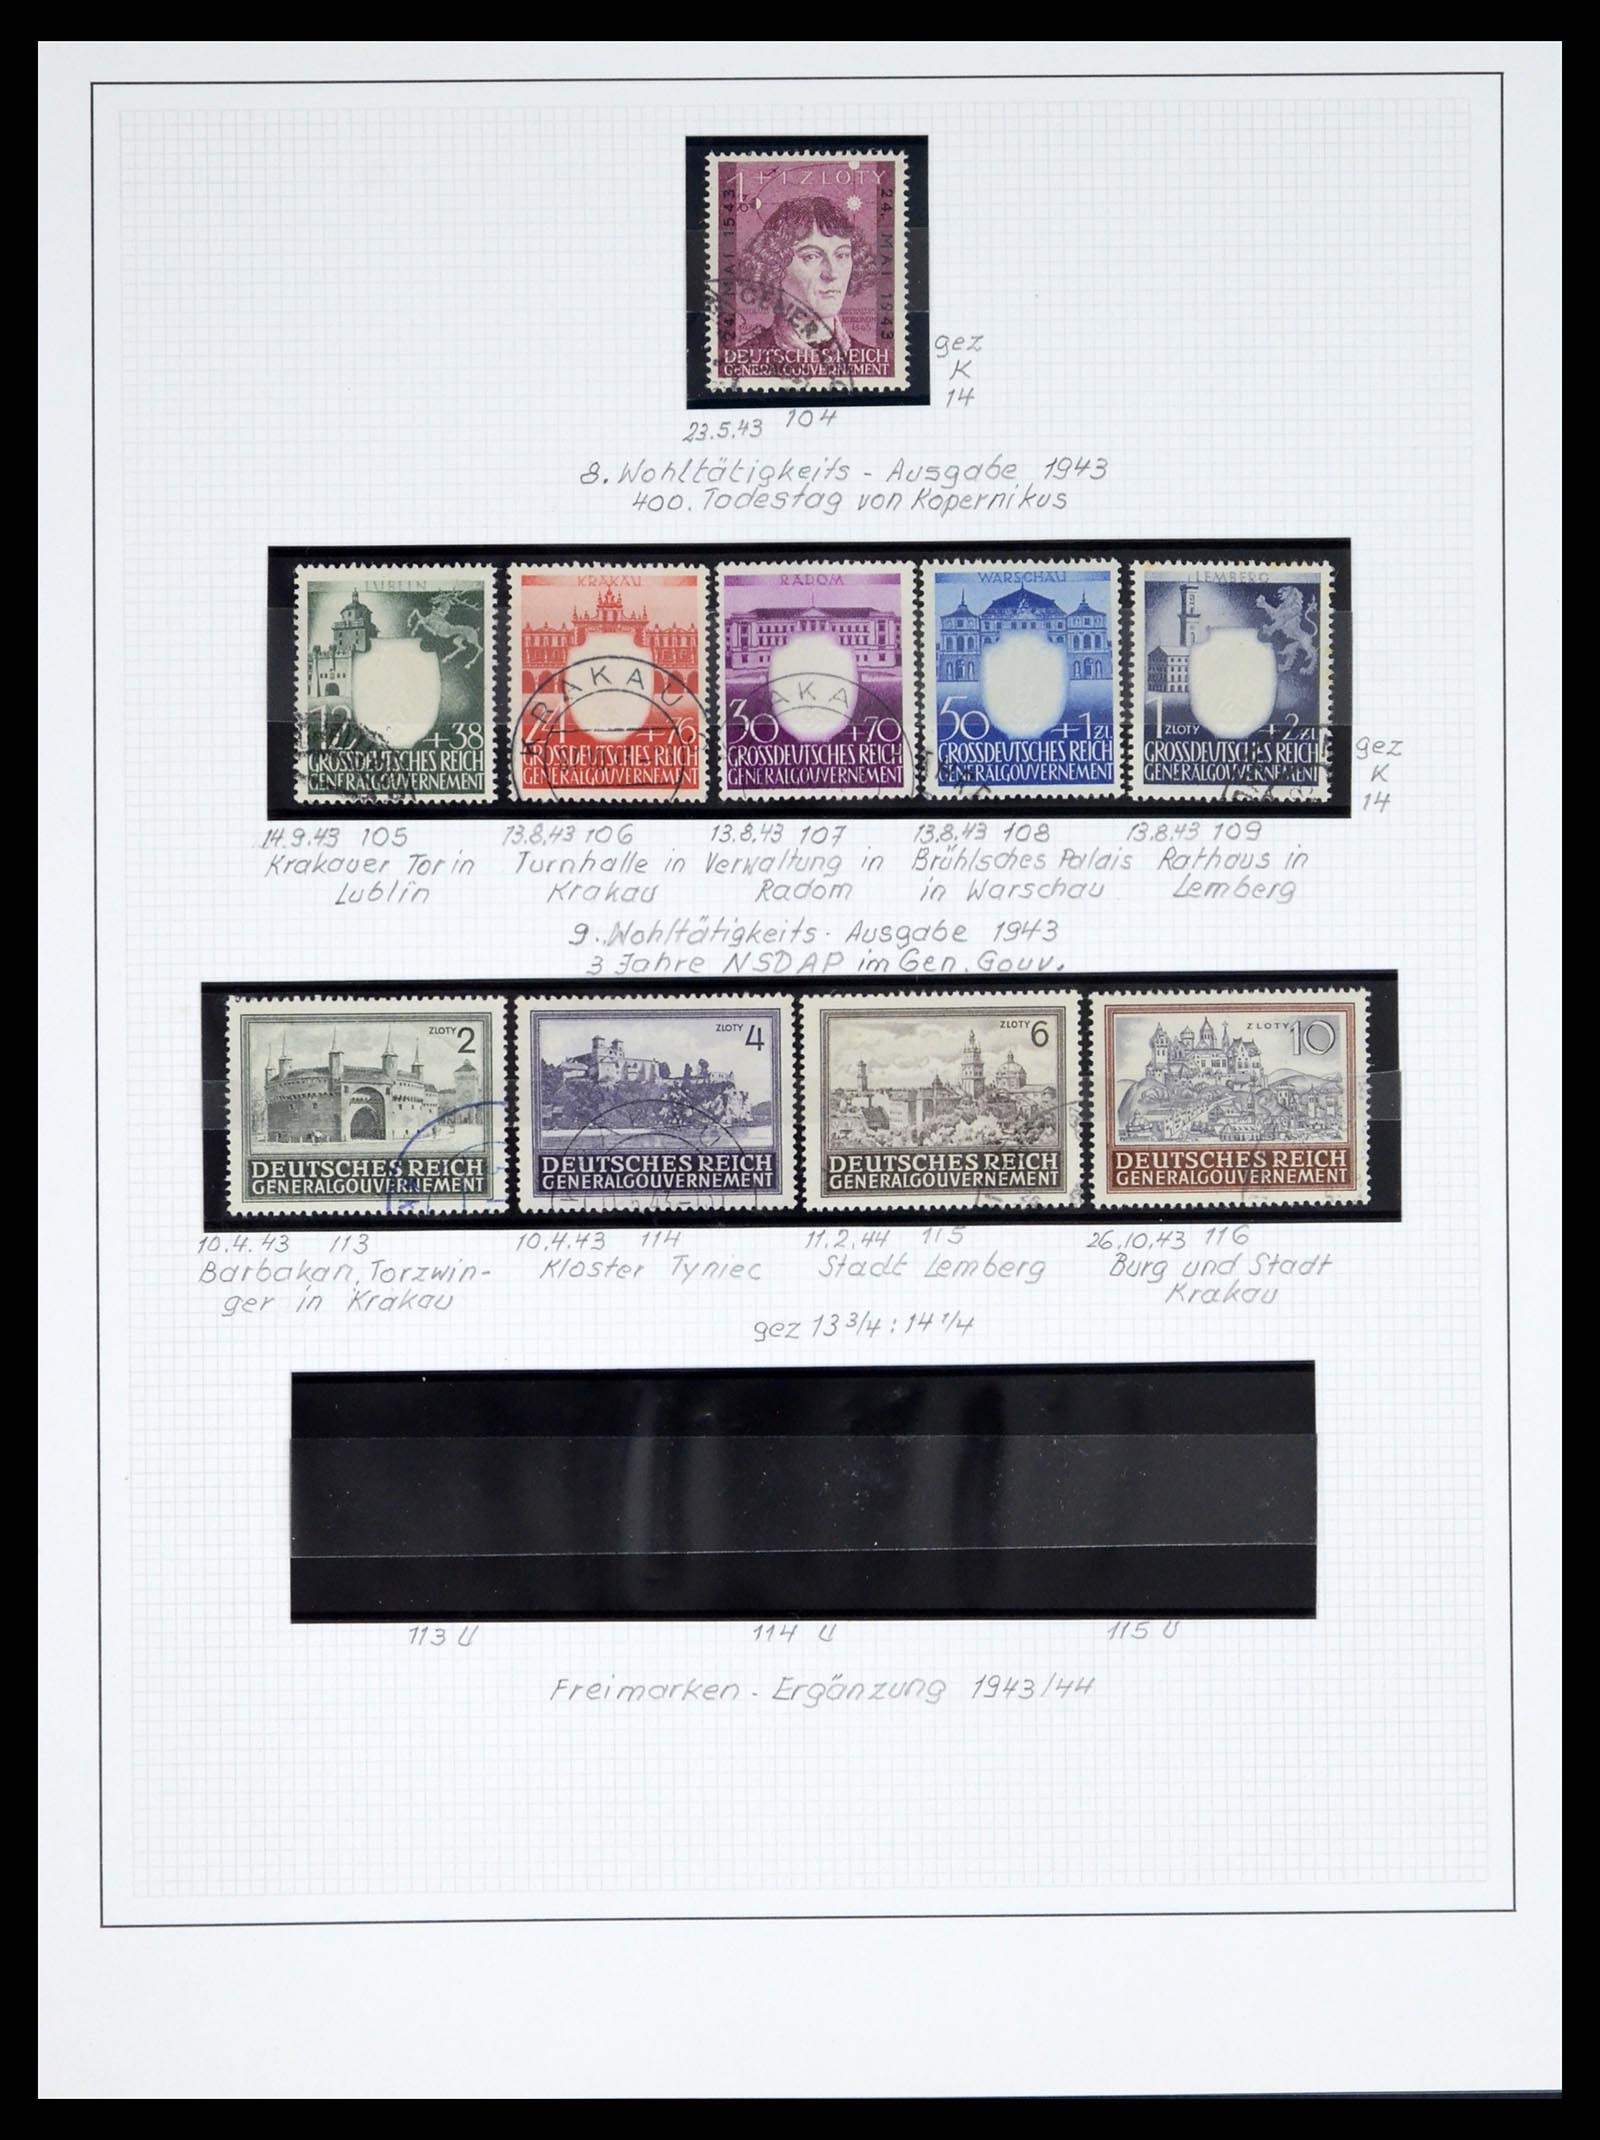 37535 173 - Stamp collection 37535 German occupation second worldwar 1939-1945.